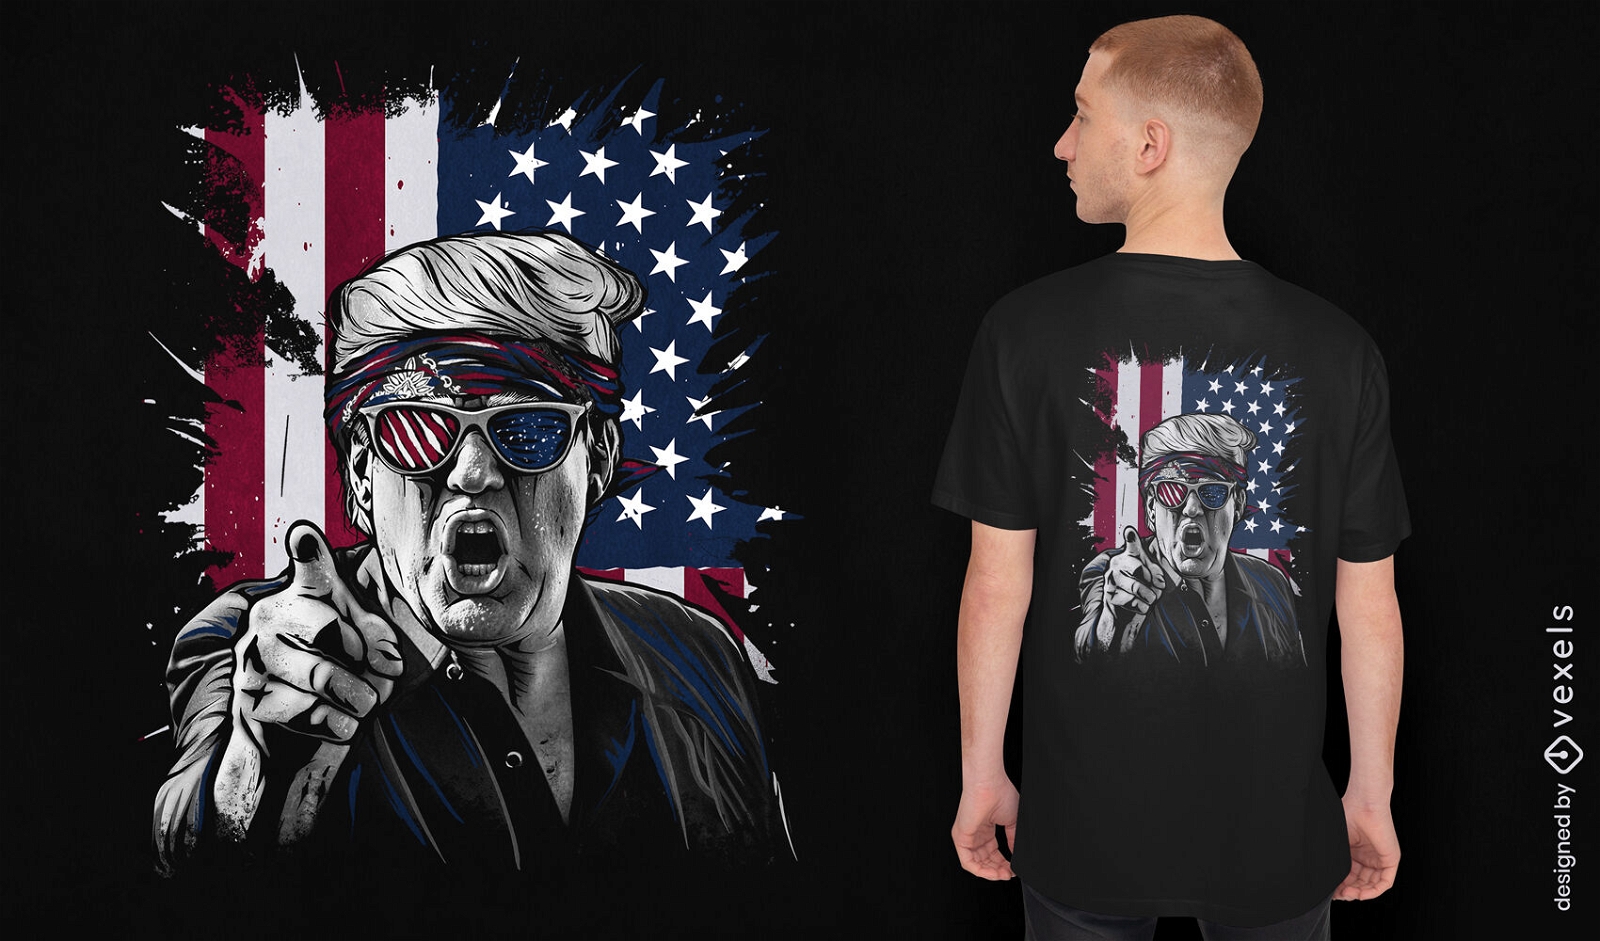 Political figure and flag t-shirt design